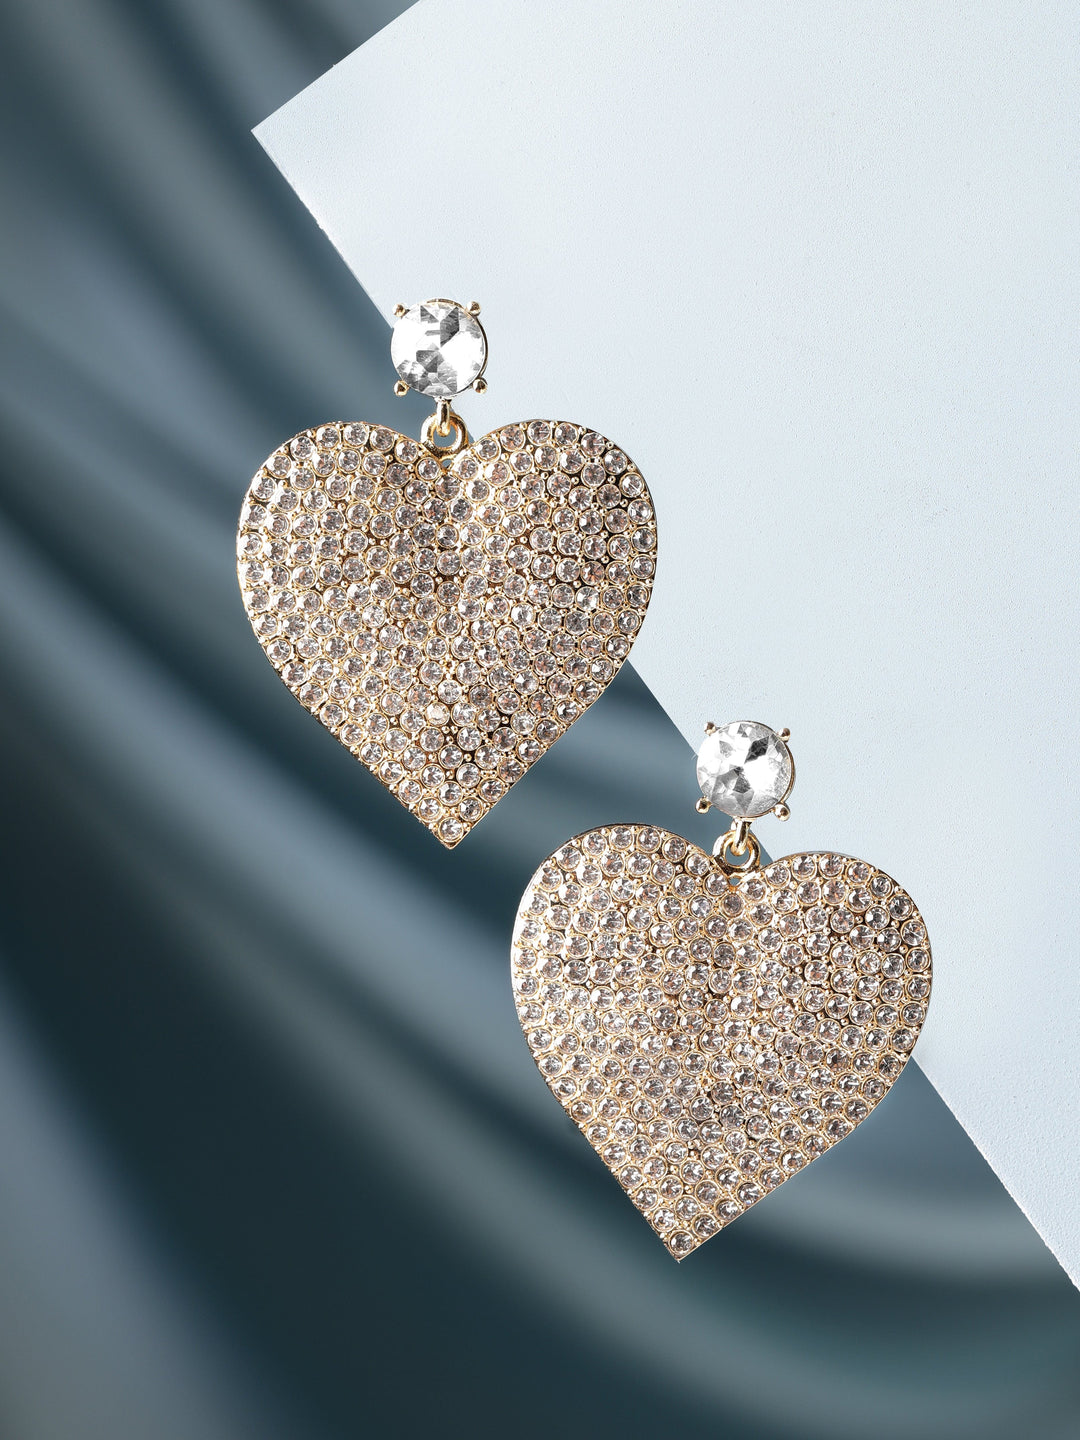 Rubans 18K Gold Toned Pave White Zircon Studded Heart Dangle Earring Earrings